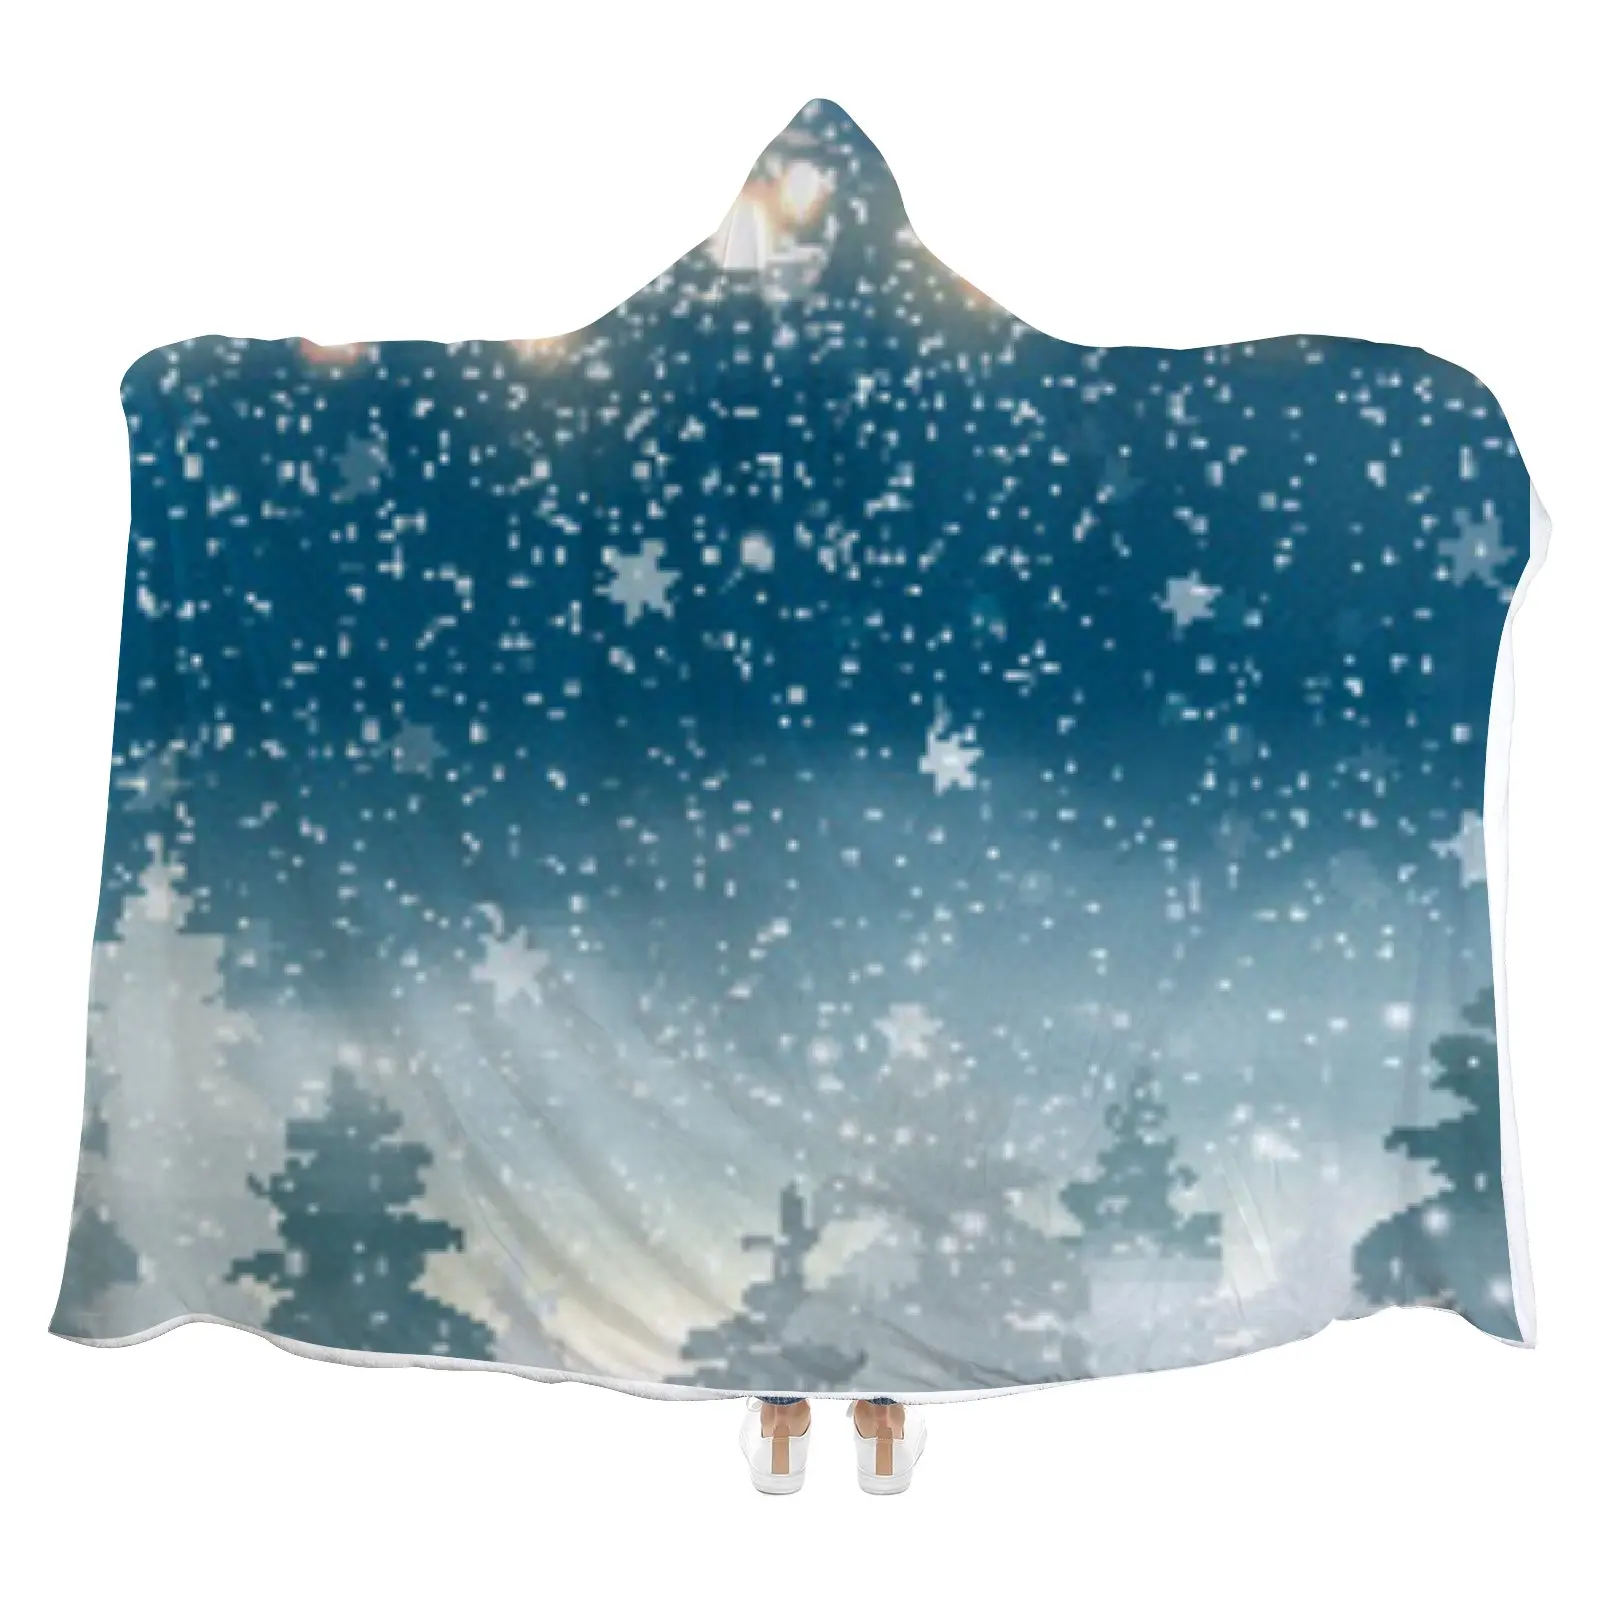 Топло Зимно Класическо Одеало с качулка 130x152 см, Уютно Одеало с качулка за възрастни, удобно плюшевое вълнена носимое одеяло